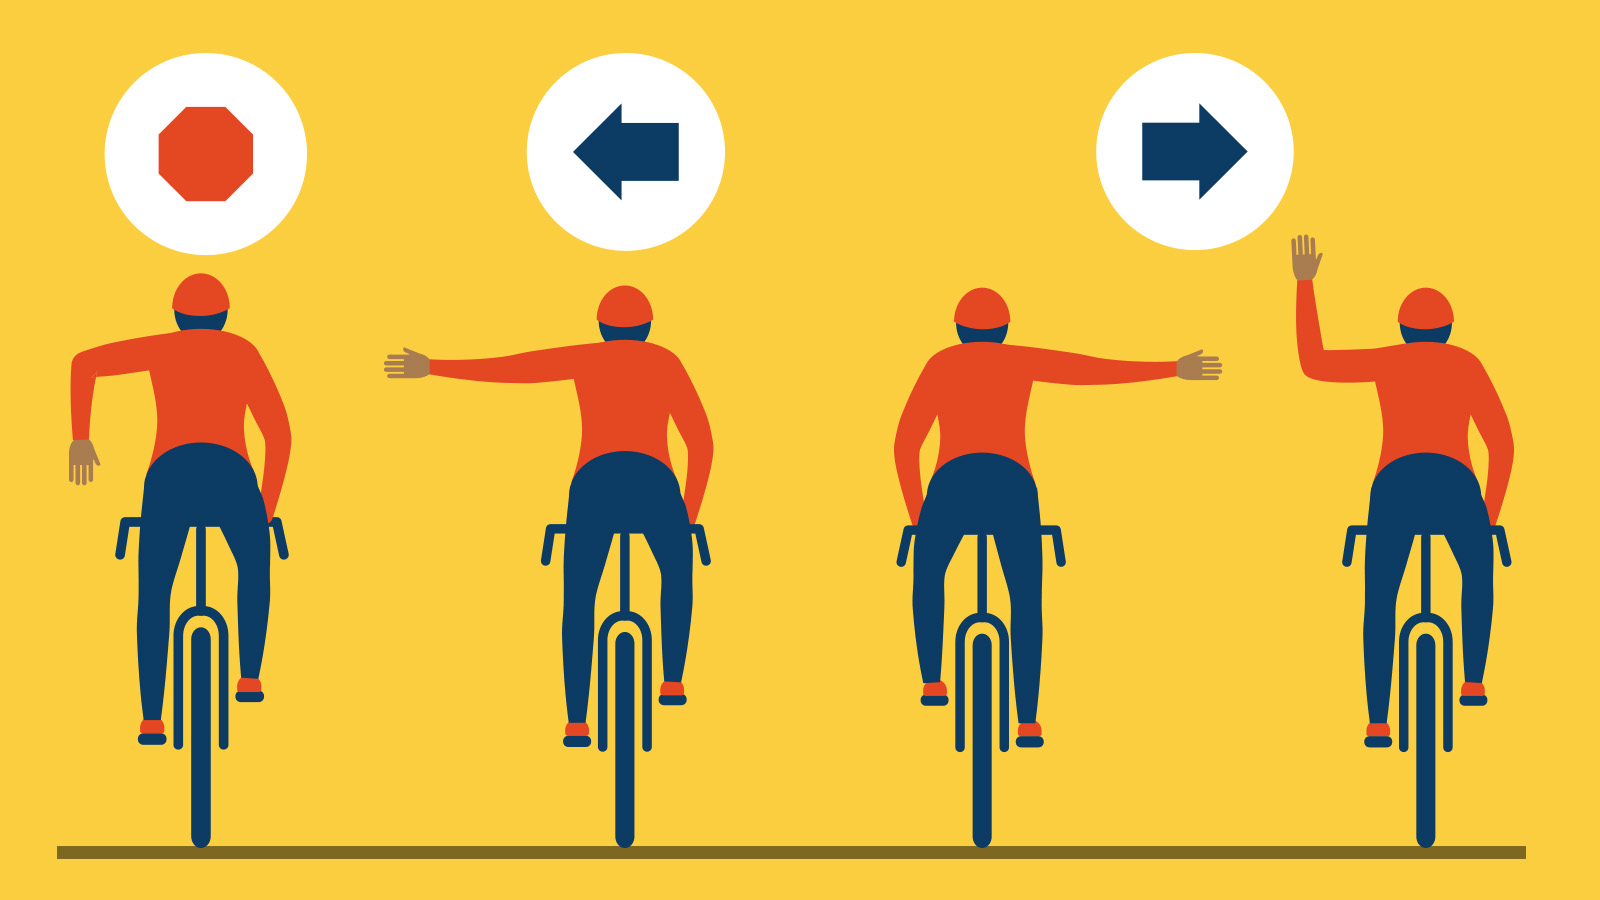 Cycling hand signals